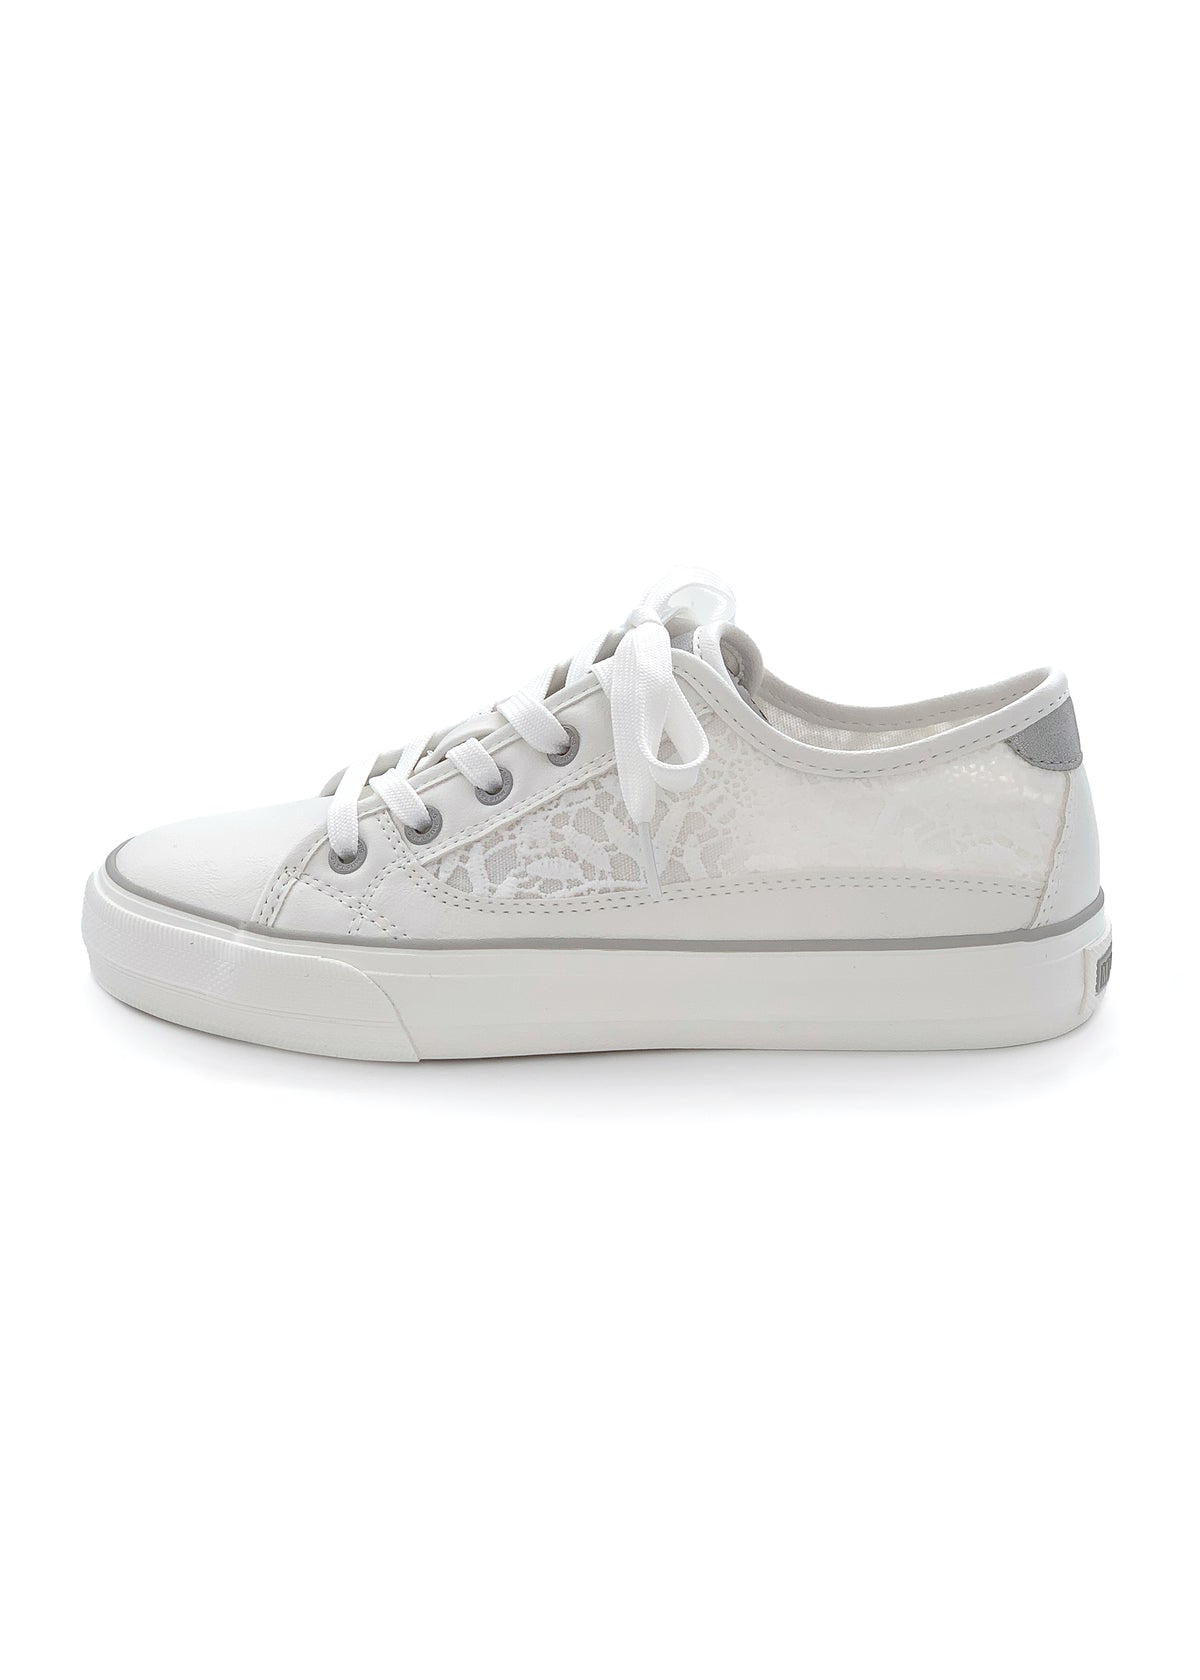 Lace sneakers - white, vegan